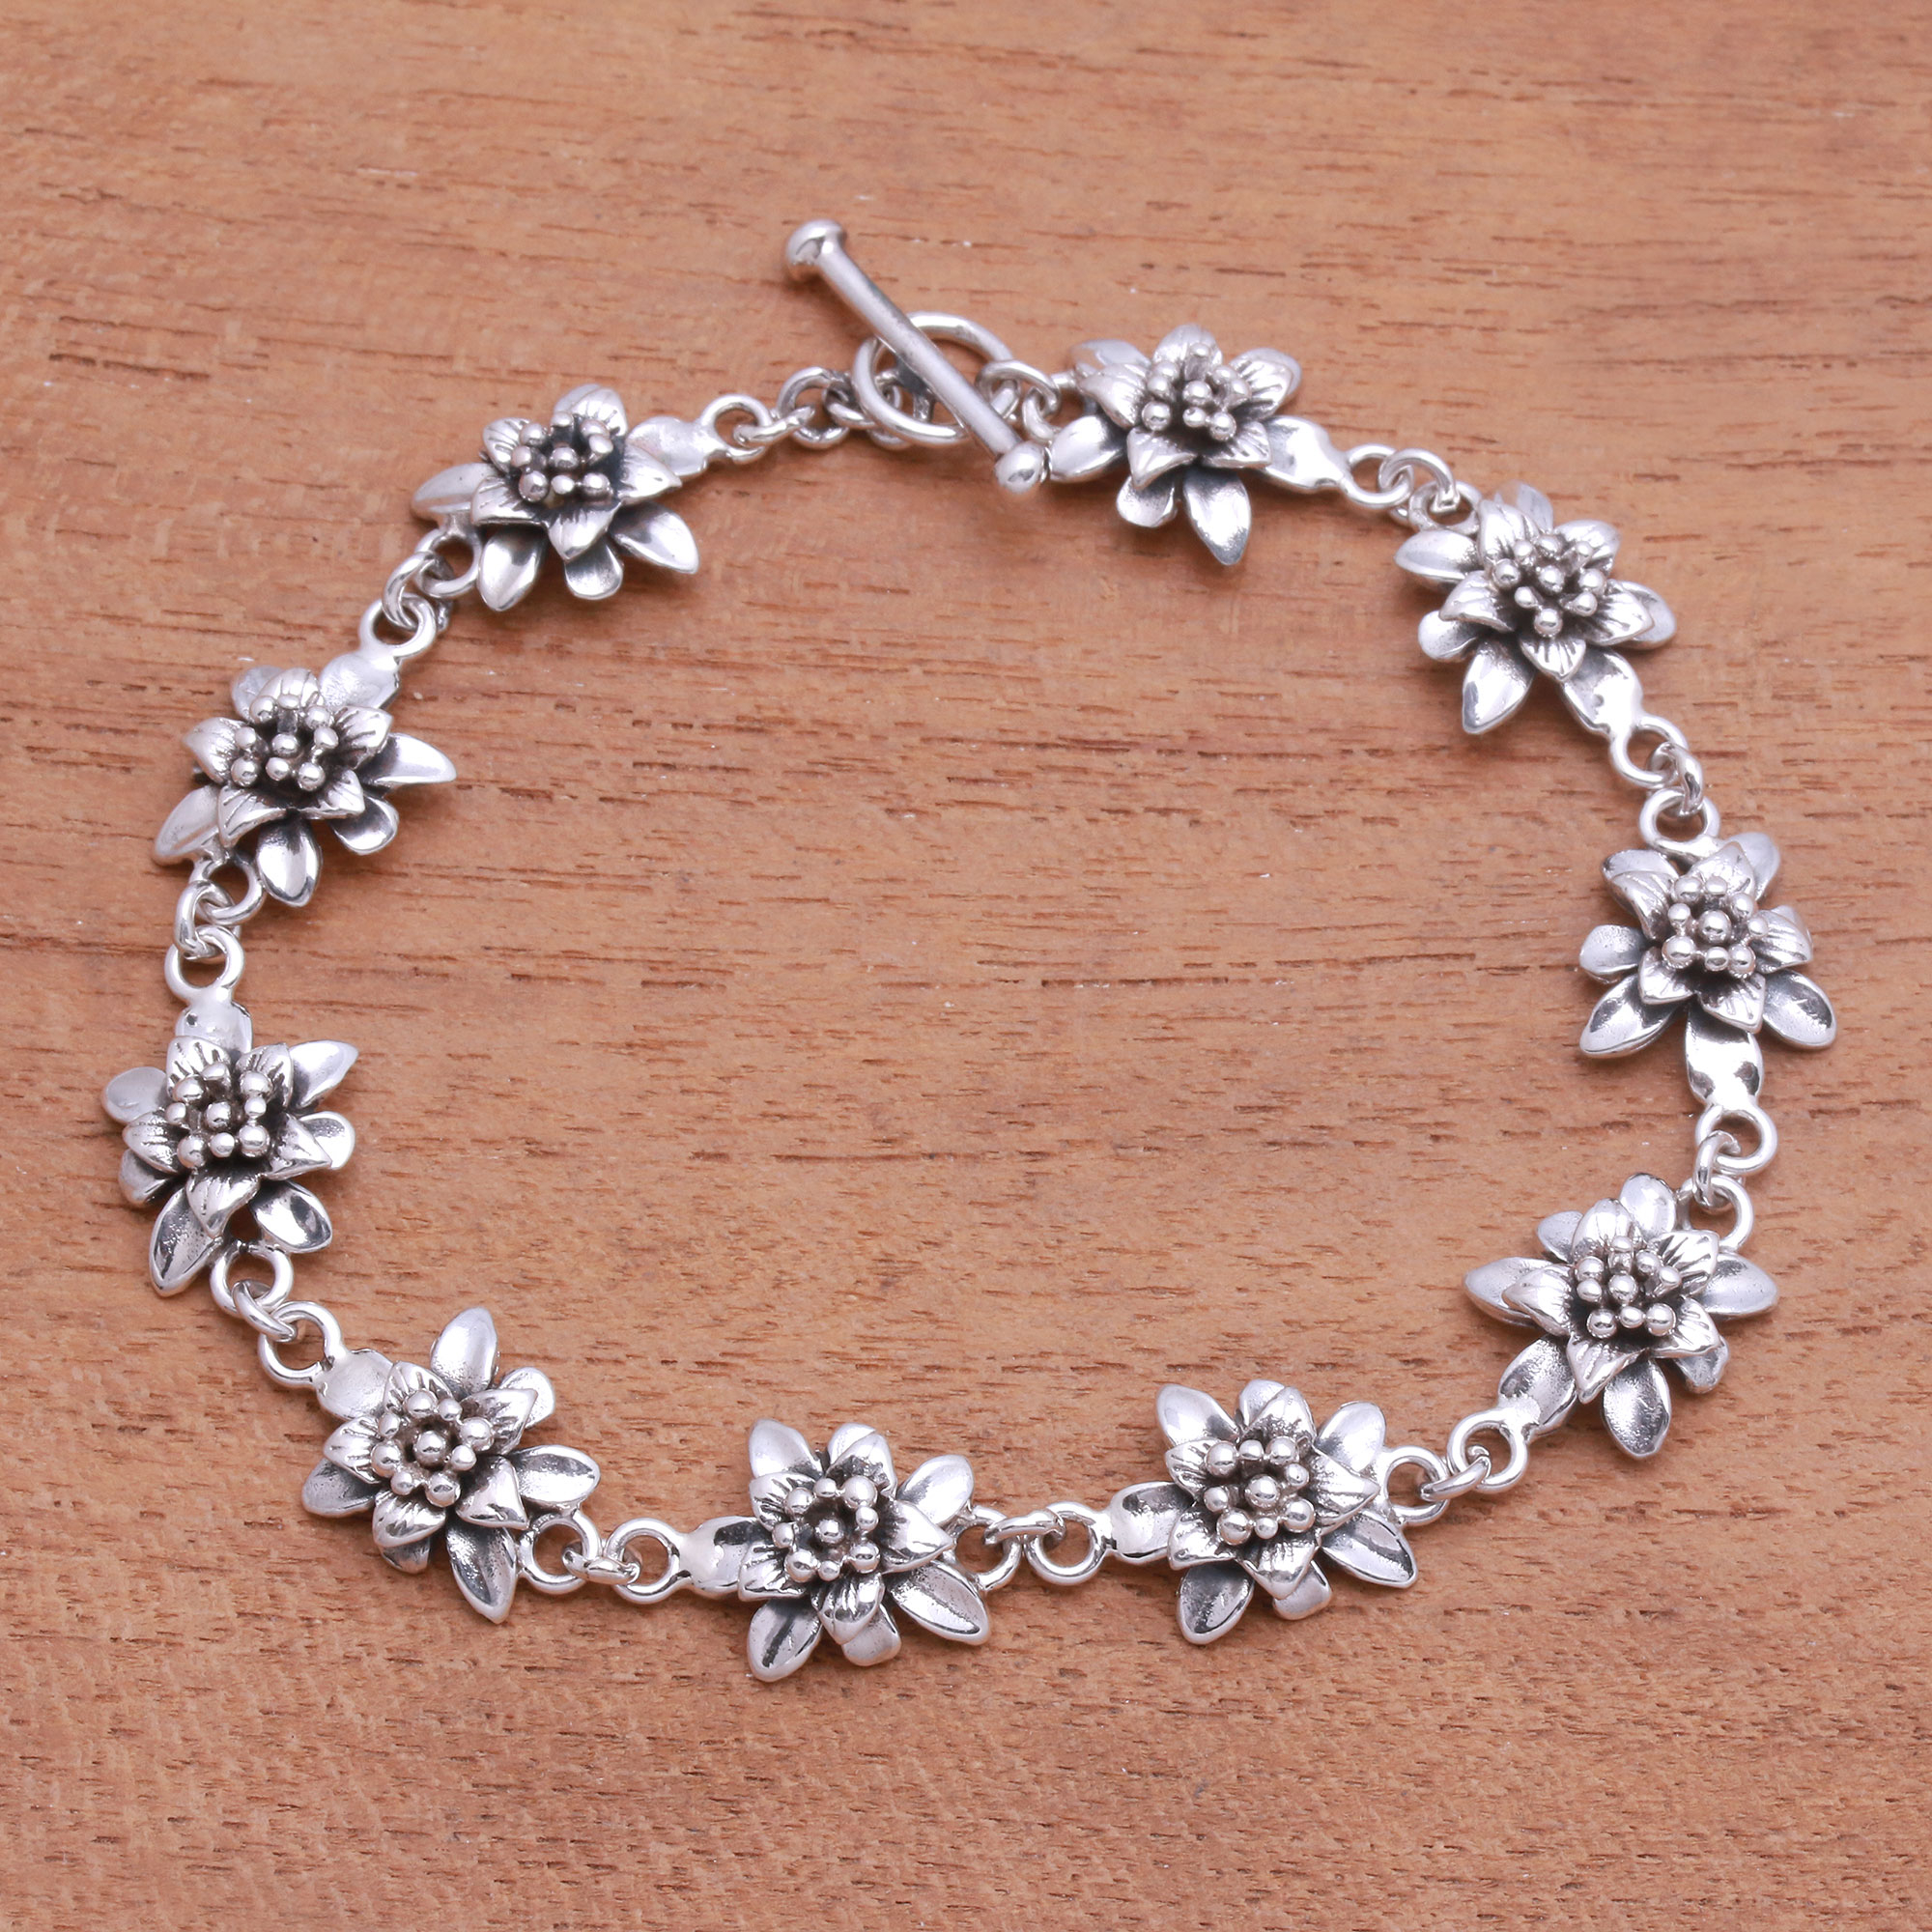 Lotus Flower Sterling Silver Link Bracelet from Bali - Lotus Constellation | NOVICA